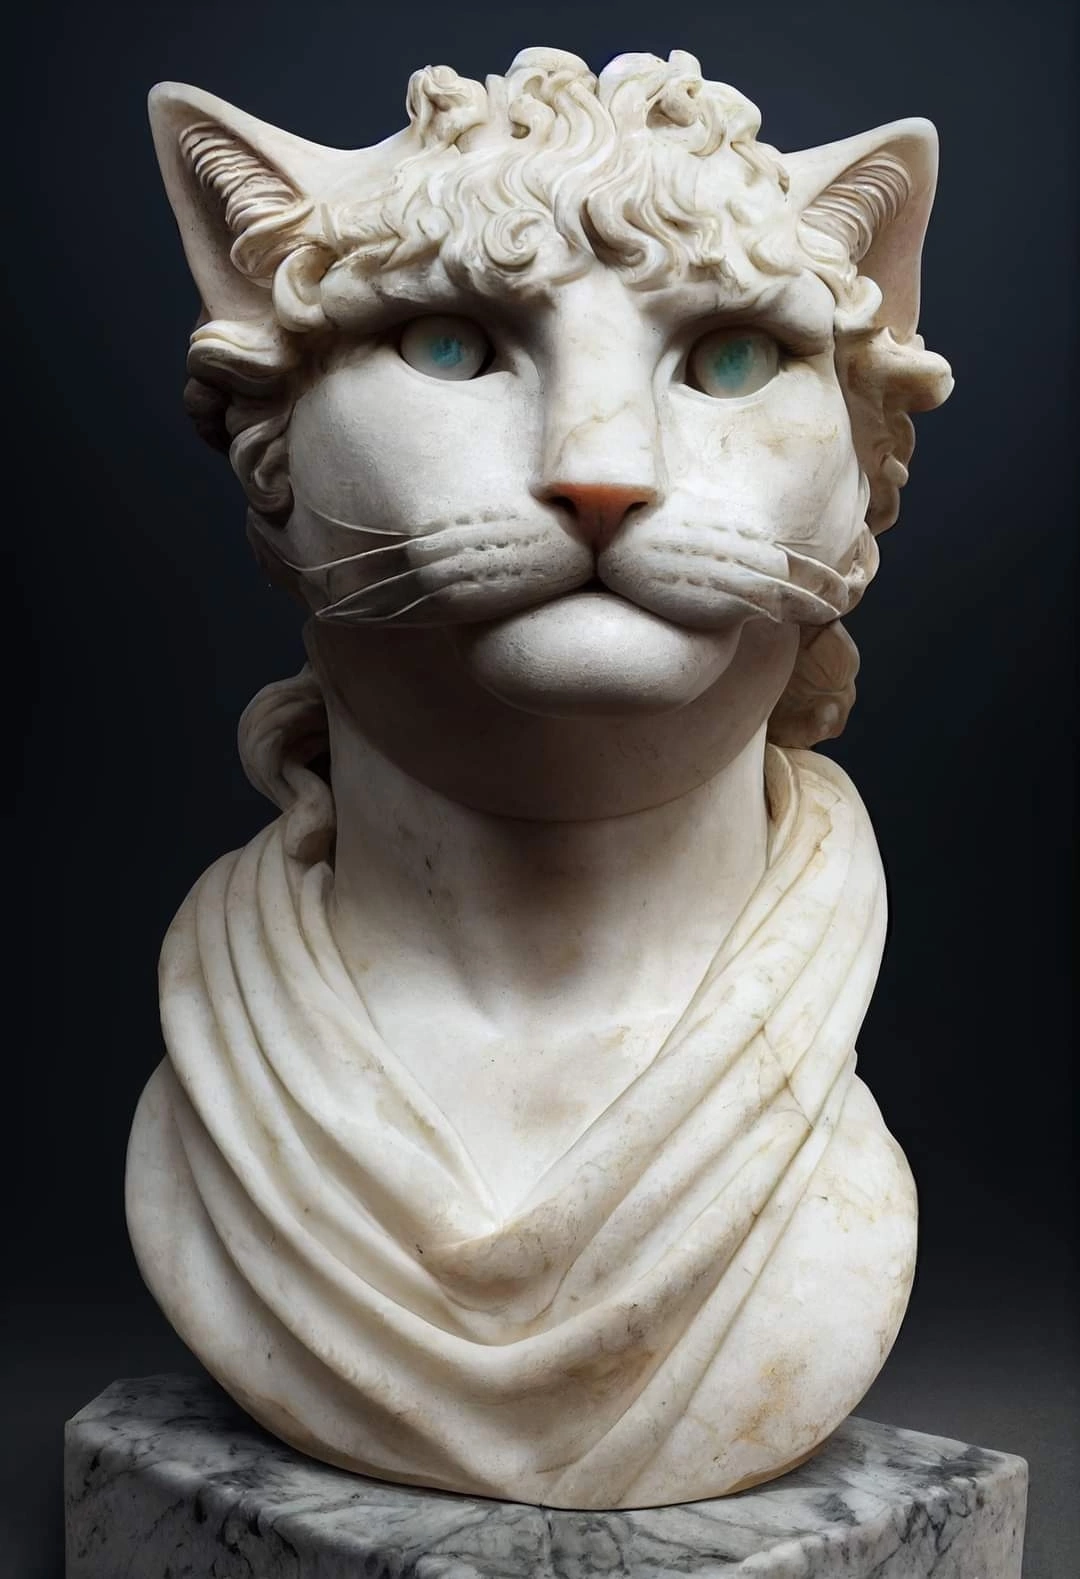 Some cat busts - cat, Sculpture, Art, Longpost, Нейронные сети